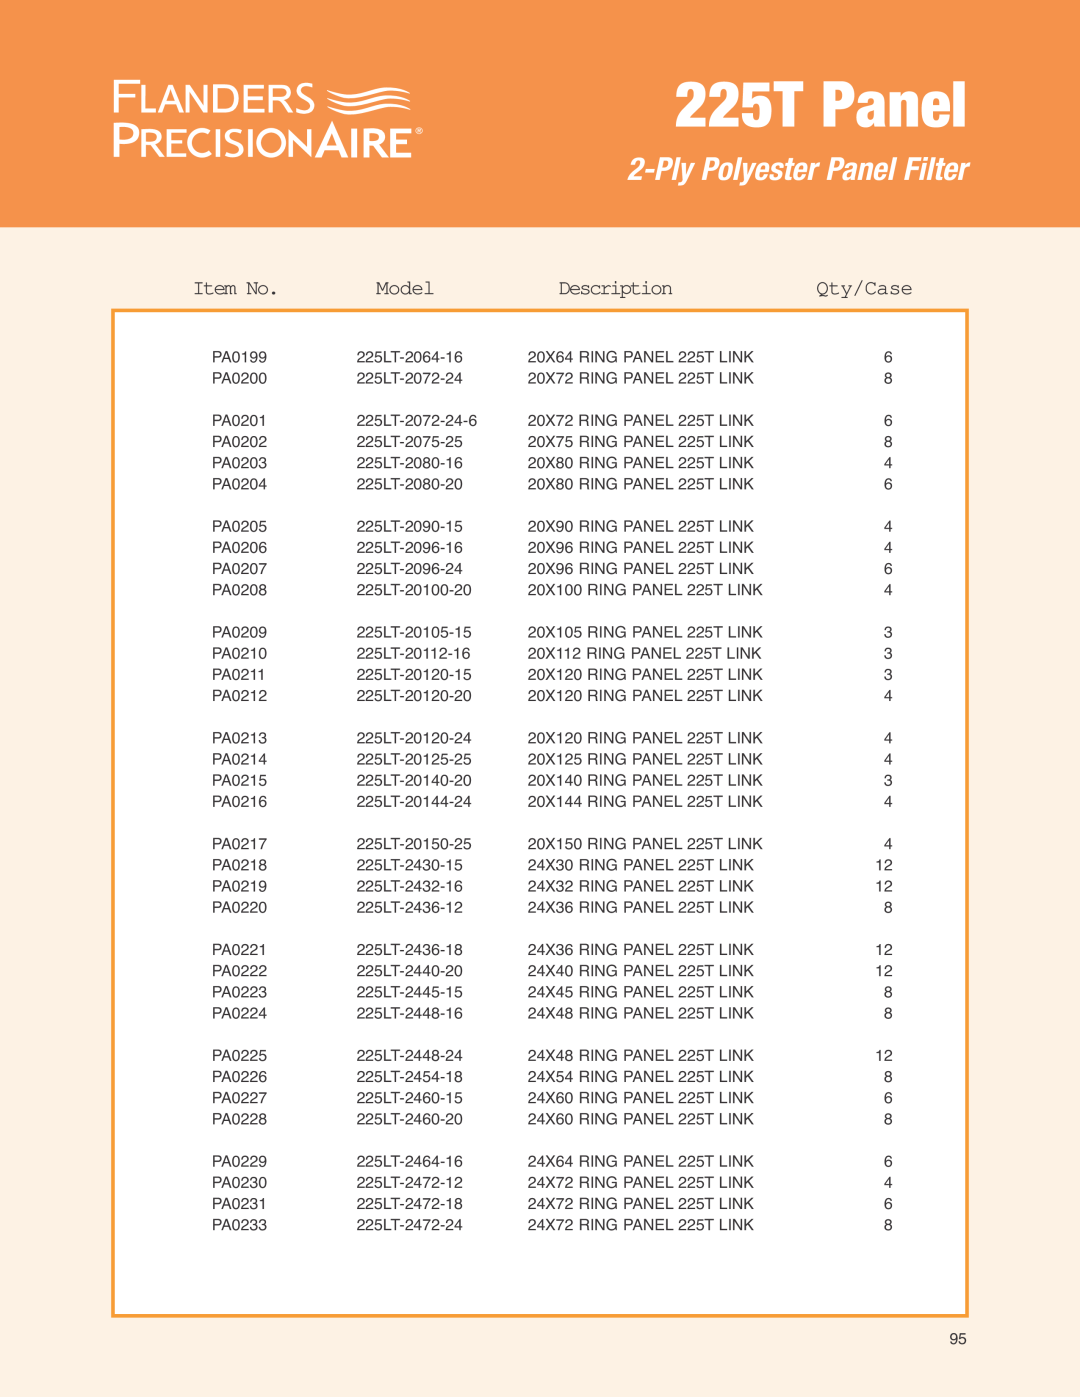 Precisionaire 225T Panels manual PlyPolyester Panel Filter, Item No, Model, Description, Qty/Case 